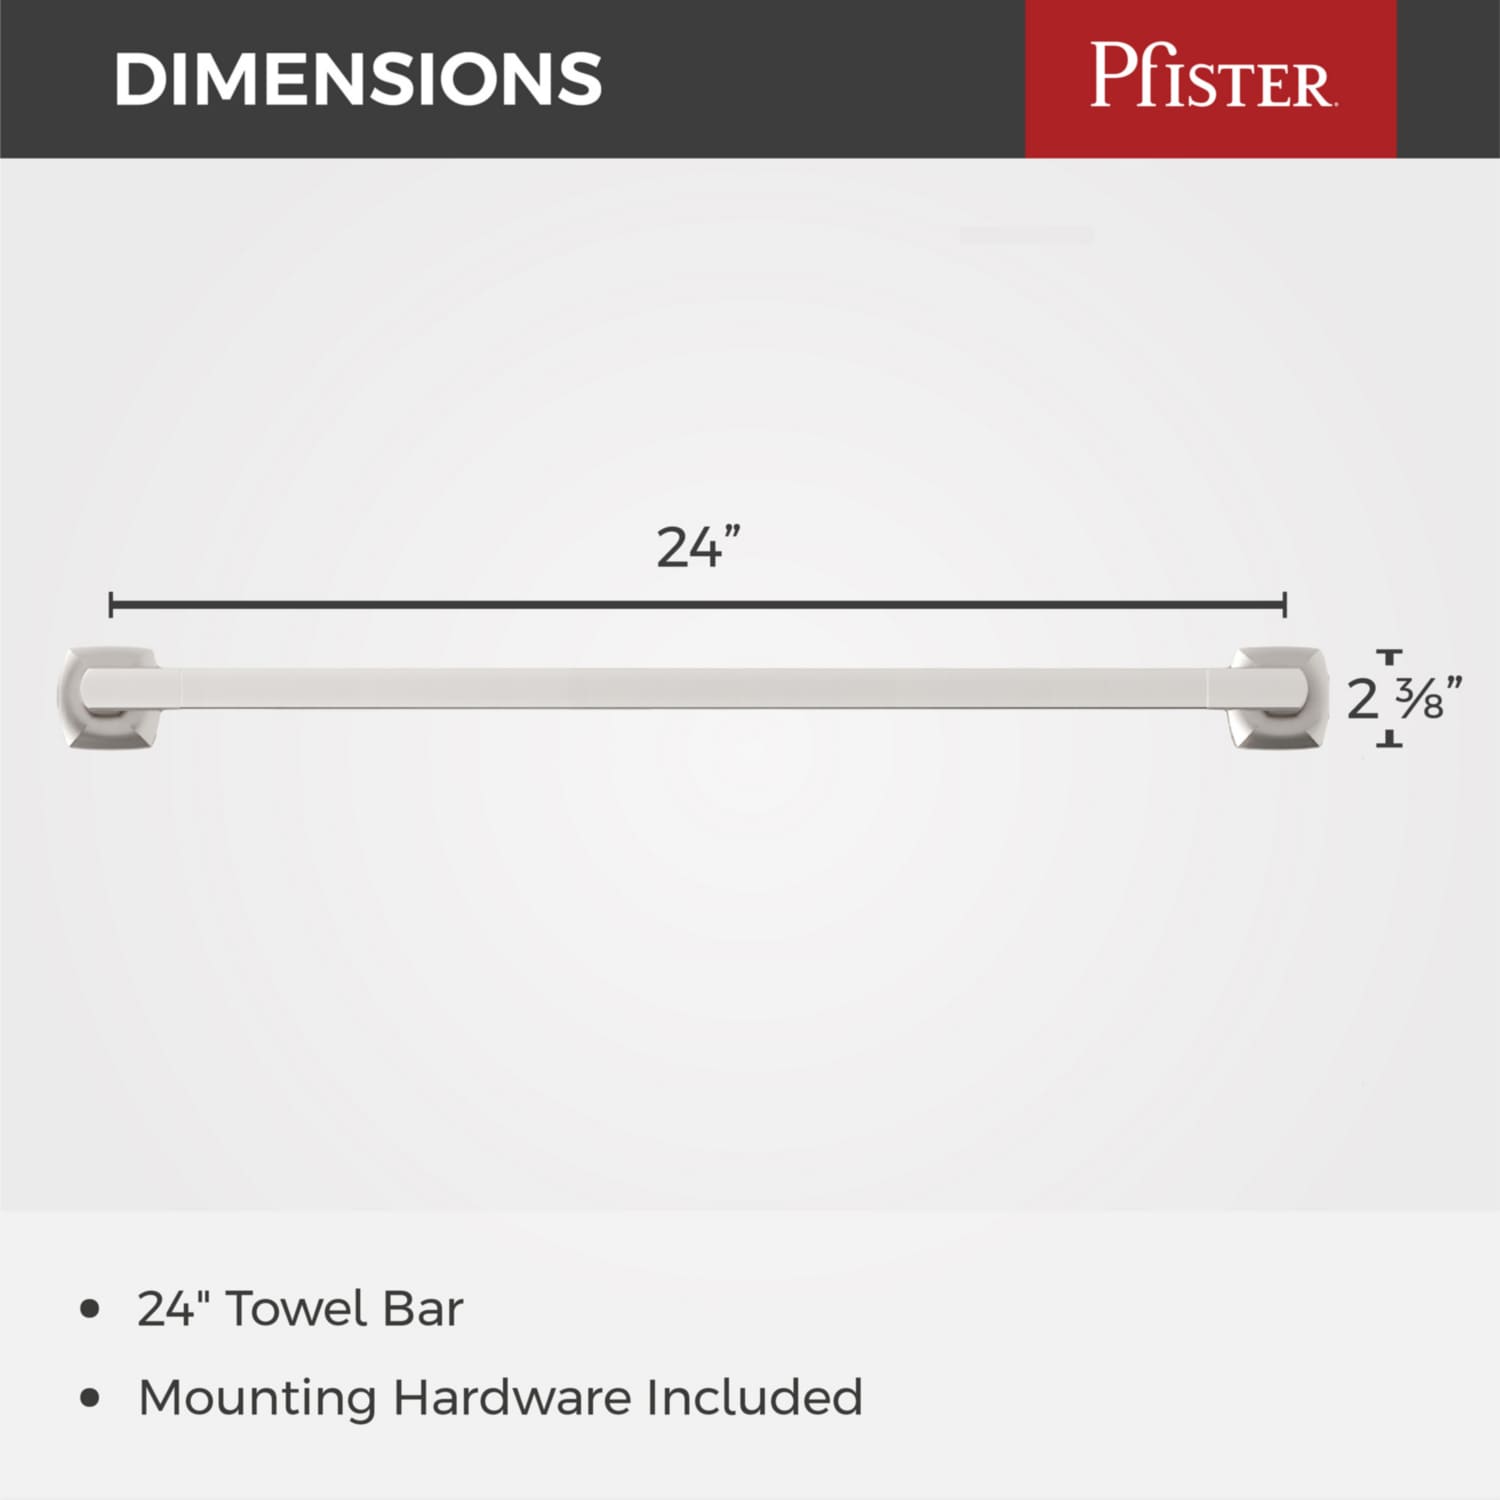 Reviews for Pfister Venturi 24 in. Towel Bar in Brushed Nickel